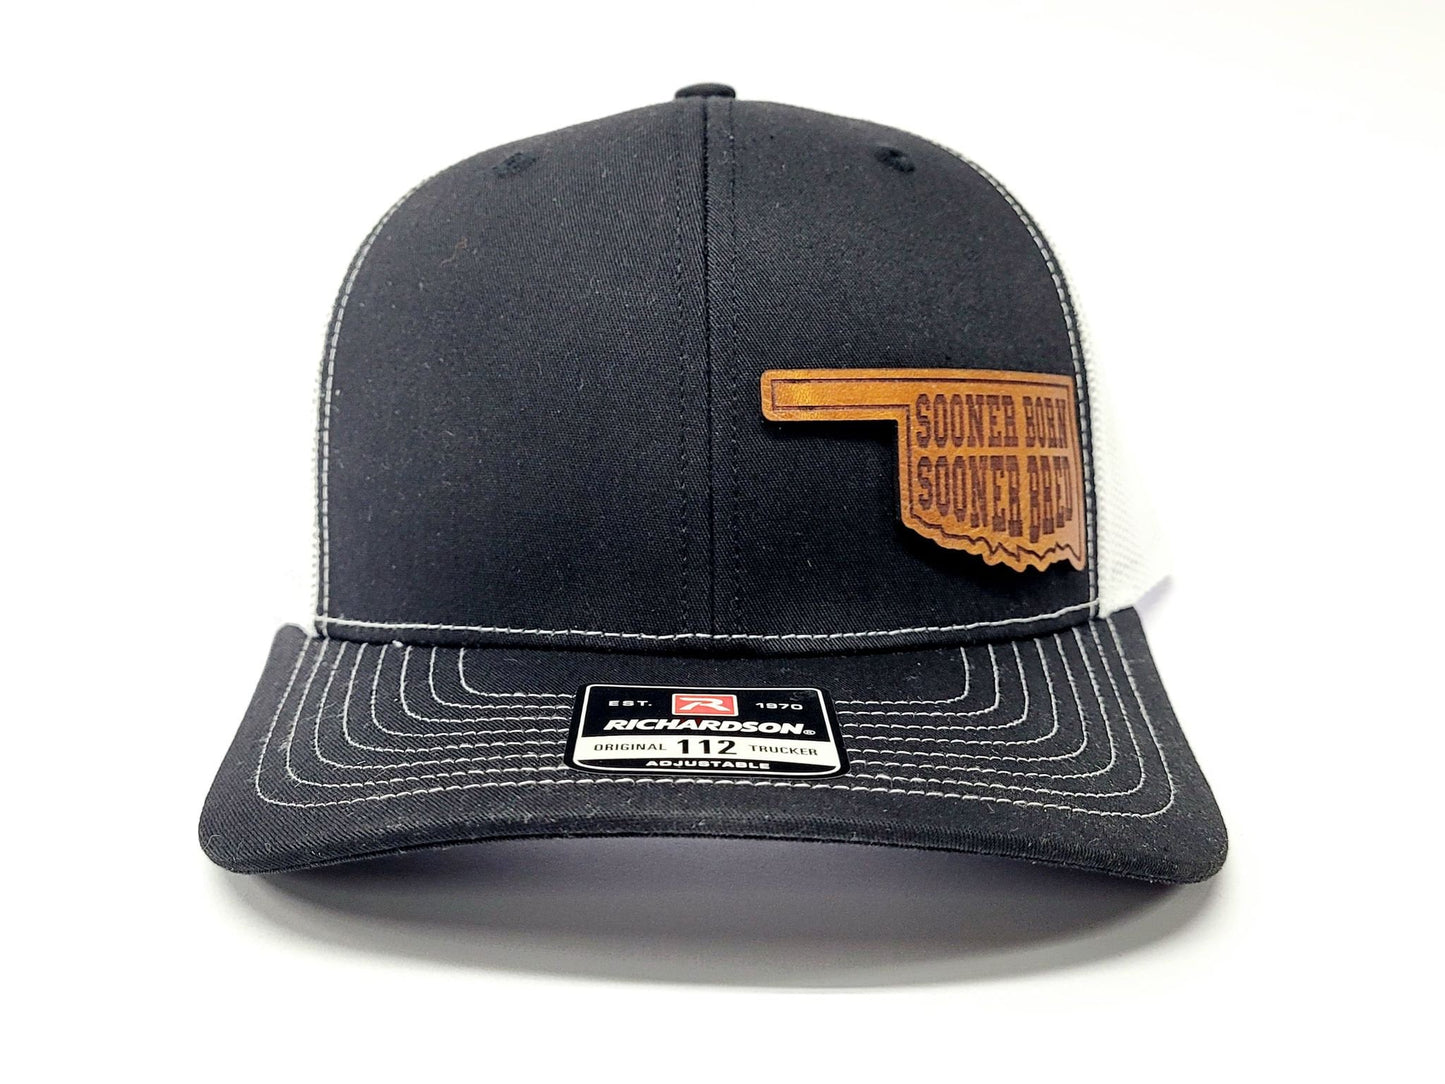 Natural Leather Patch Sooner Born Sooner Bred Oklahoma Trucker Hat | Handmade in Oklahoma City USA | Mesh Black Snapback Cap